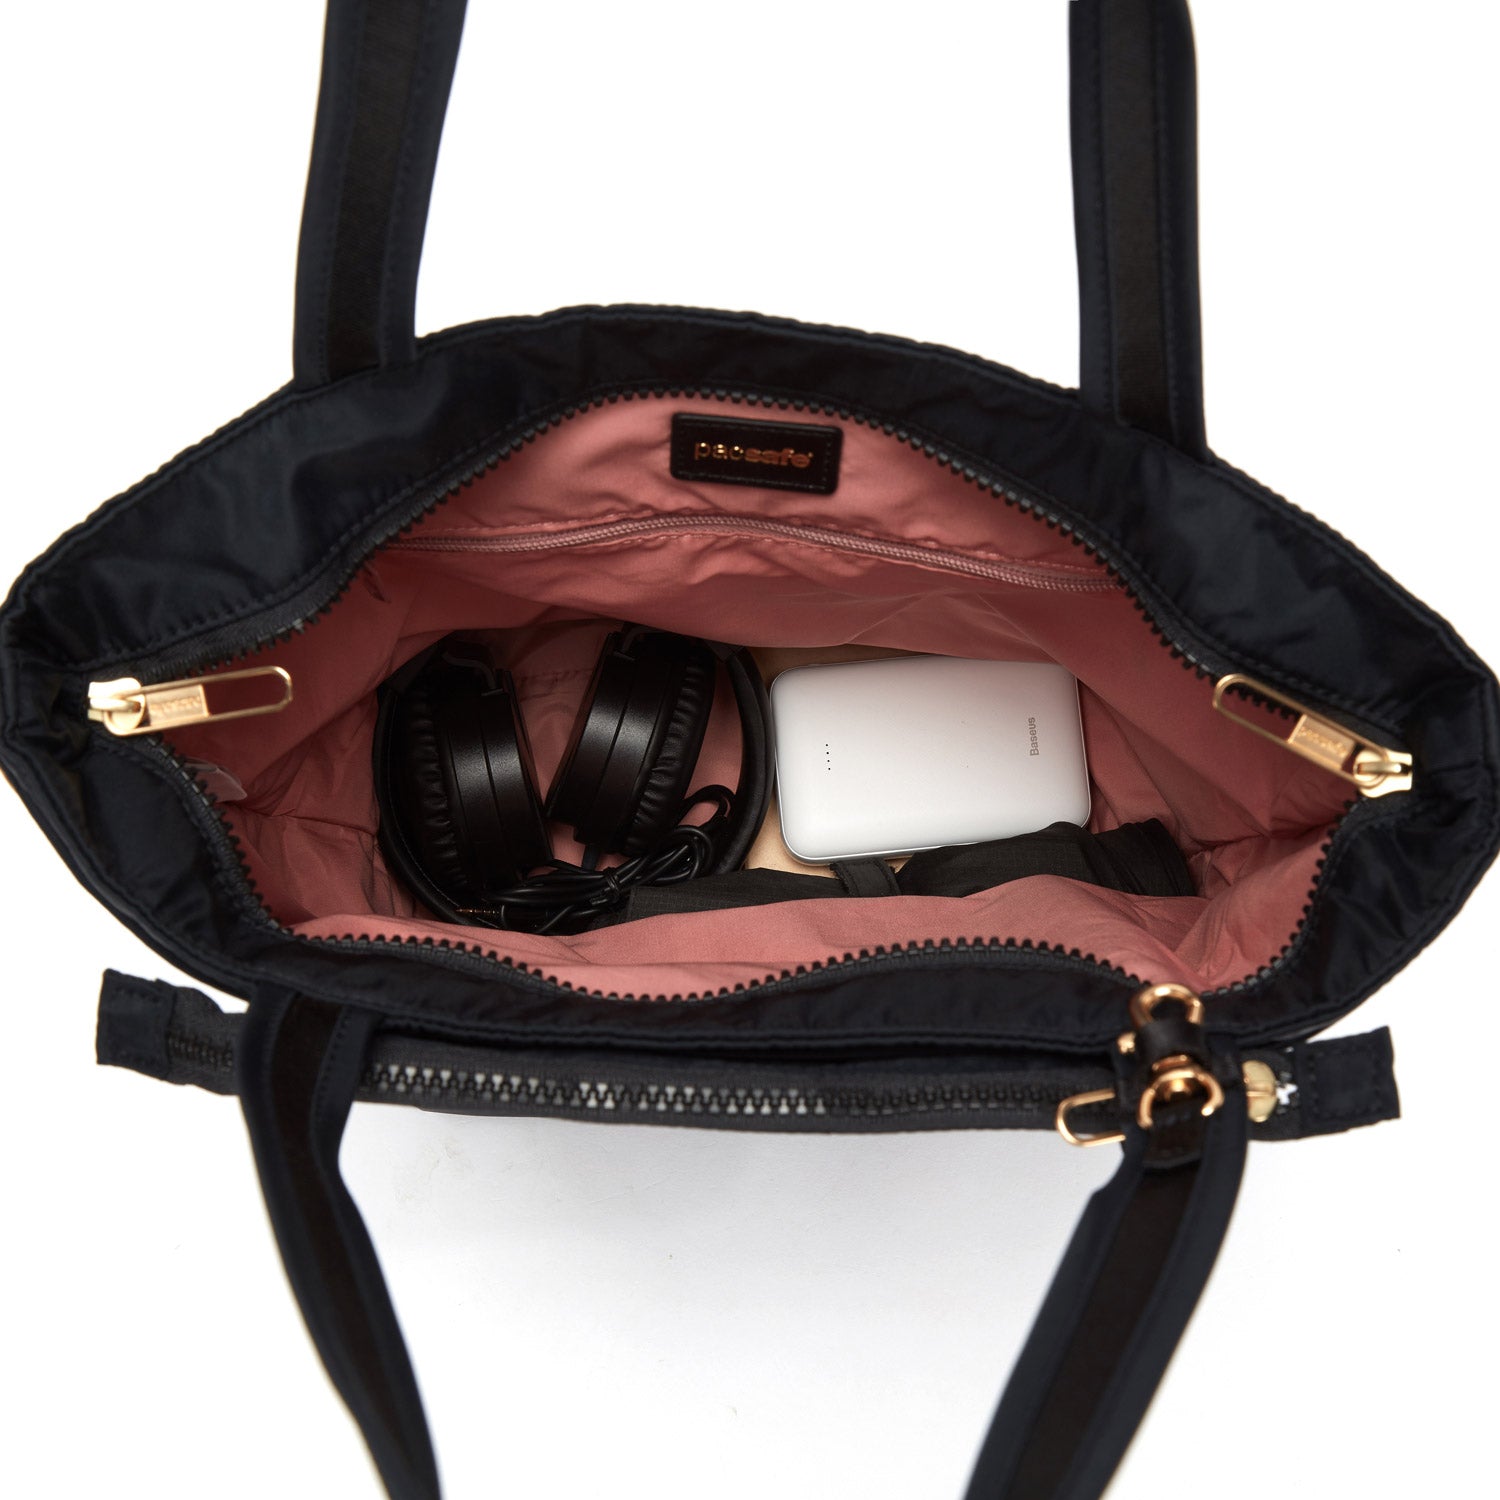 Pacsafe - Citysafe CX Anti-Theft Packable Vertical Tote Bag - Black-9